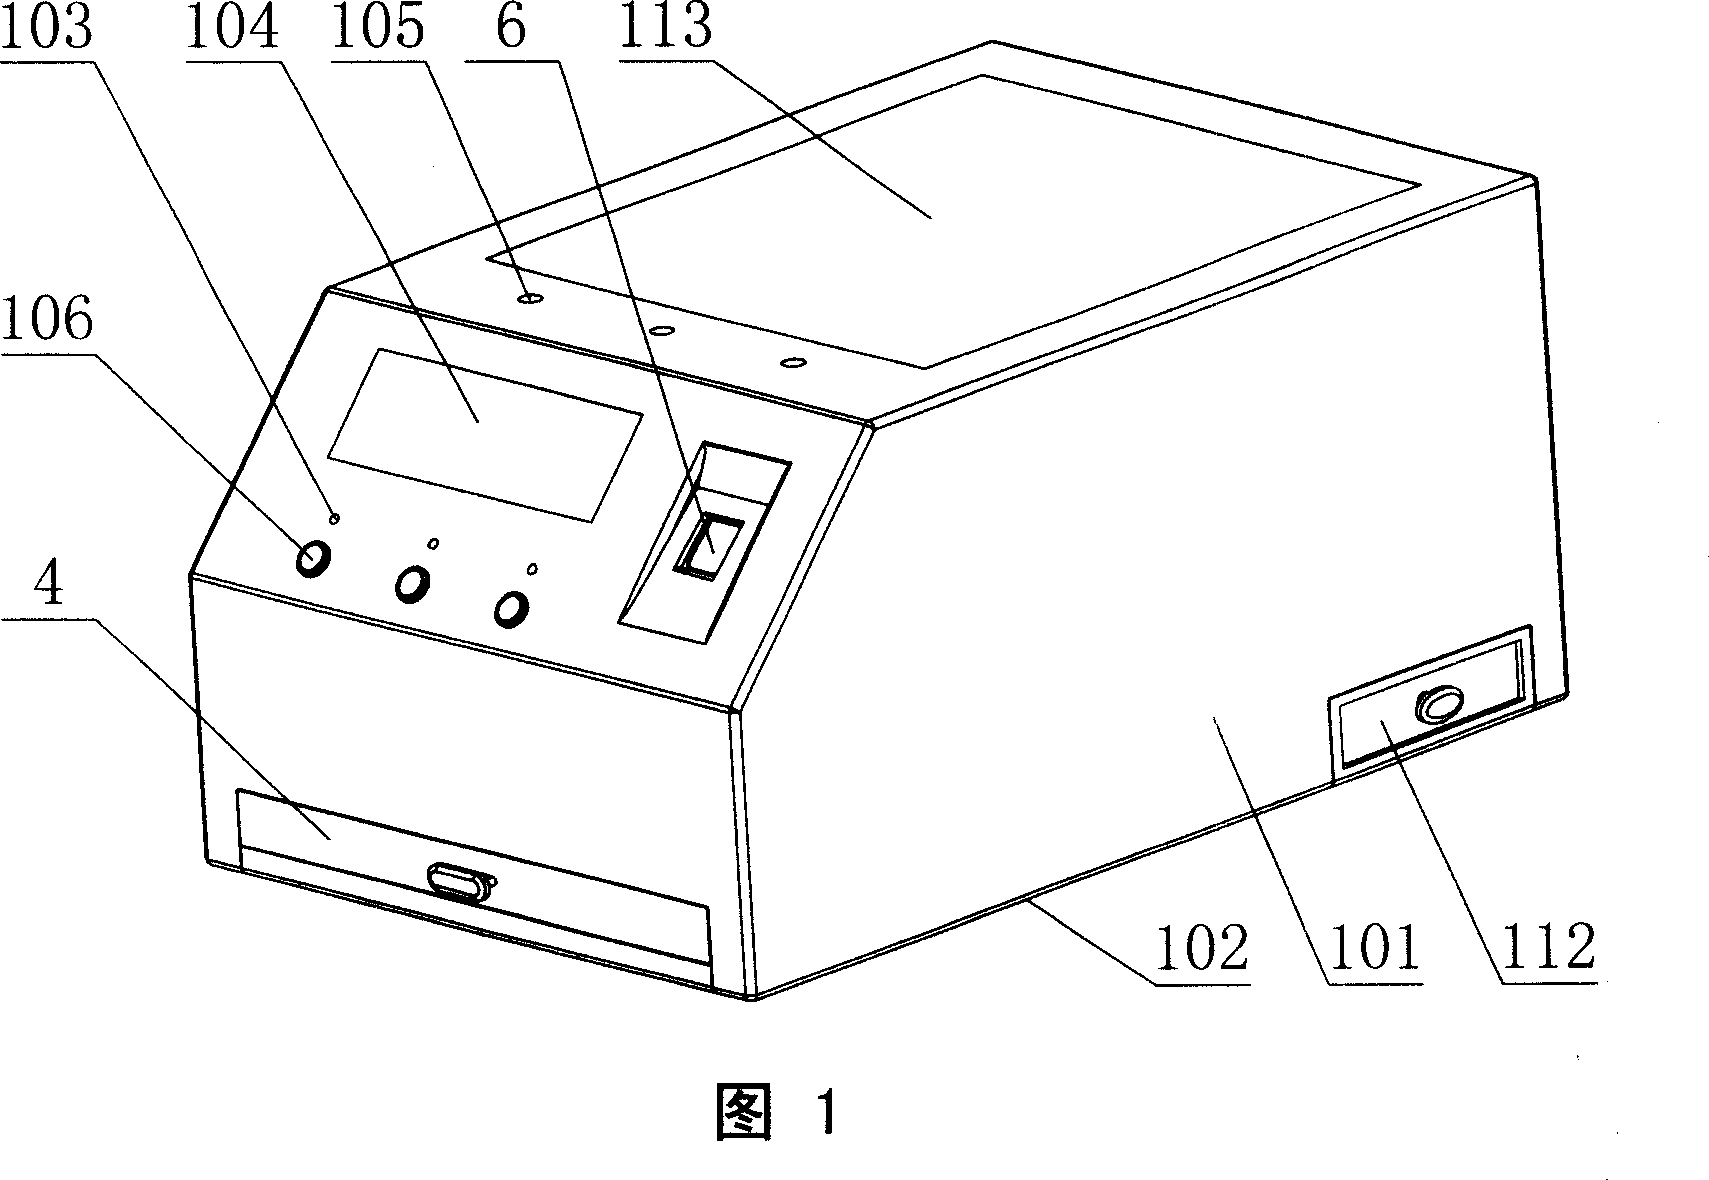 Remote-network signature apparatus